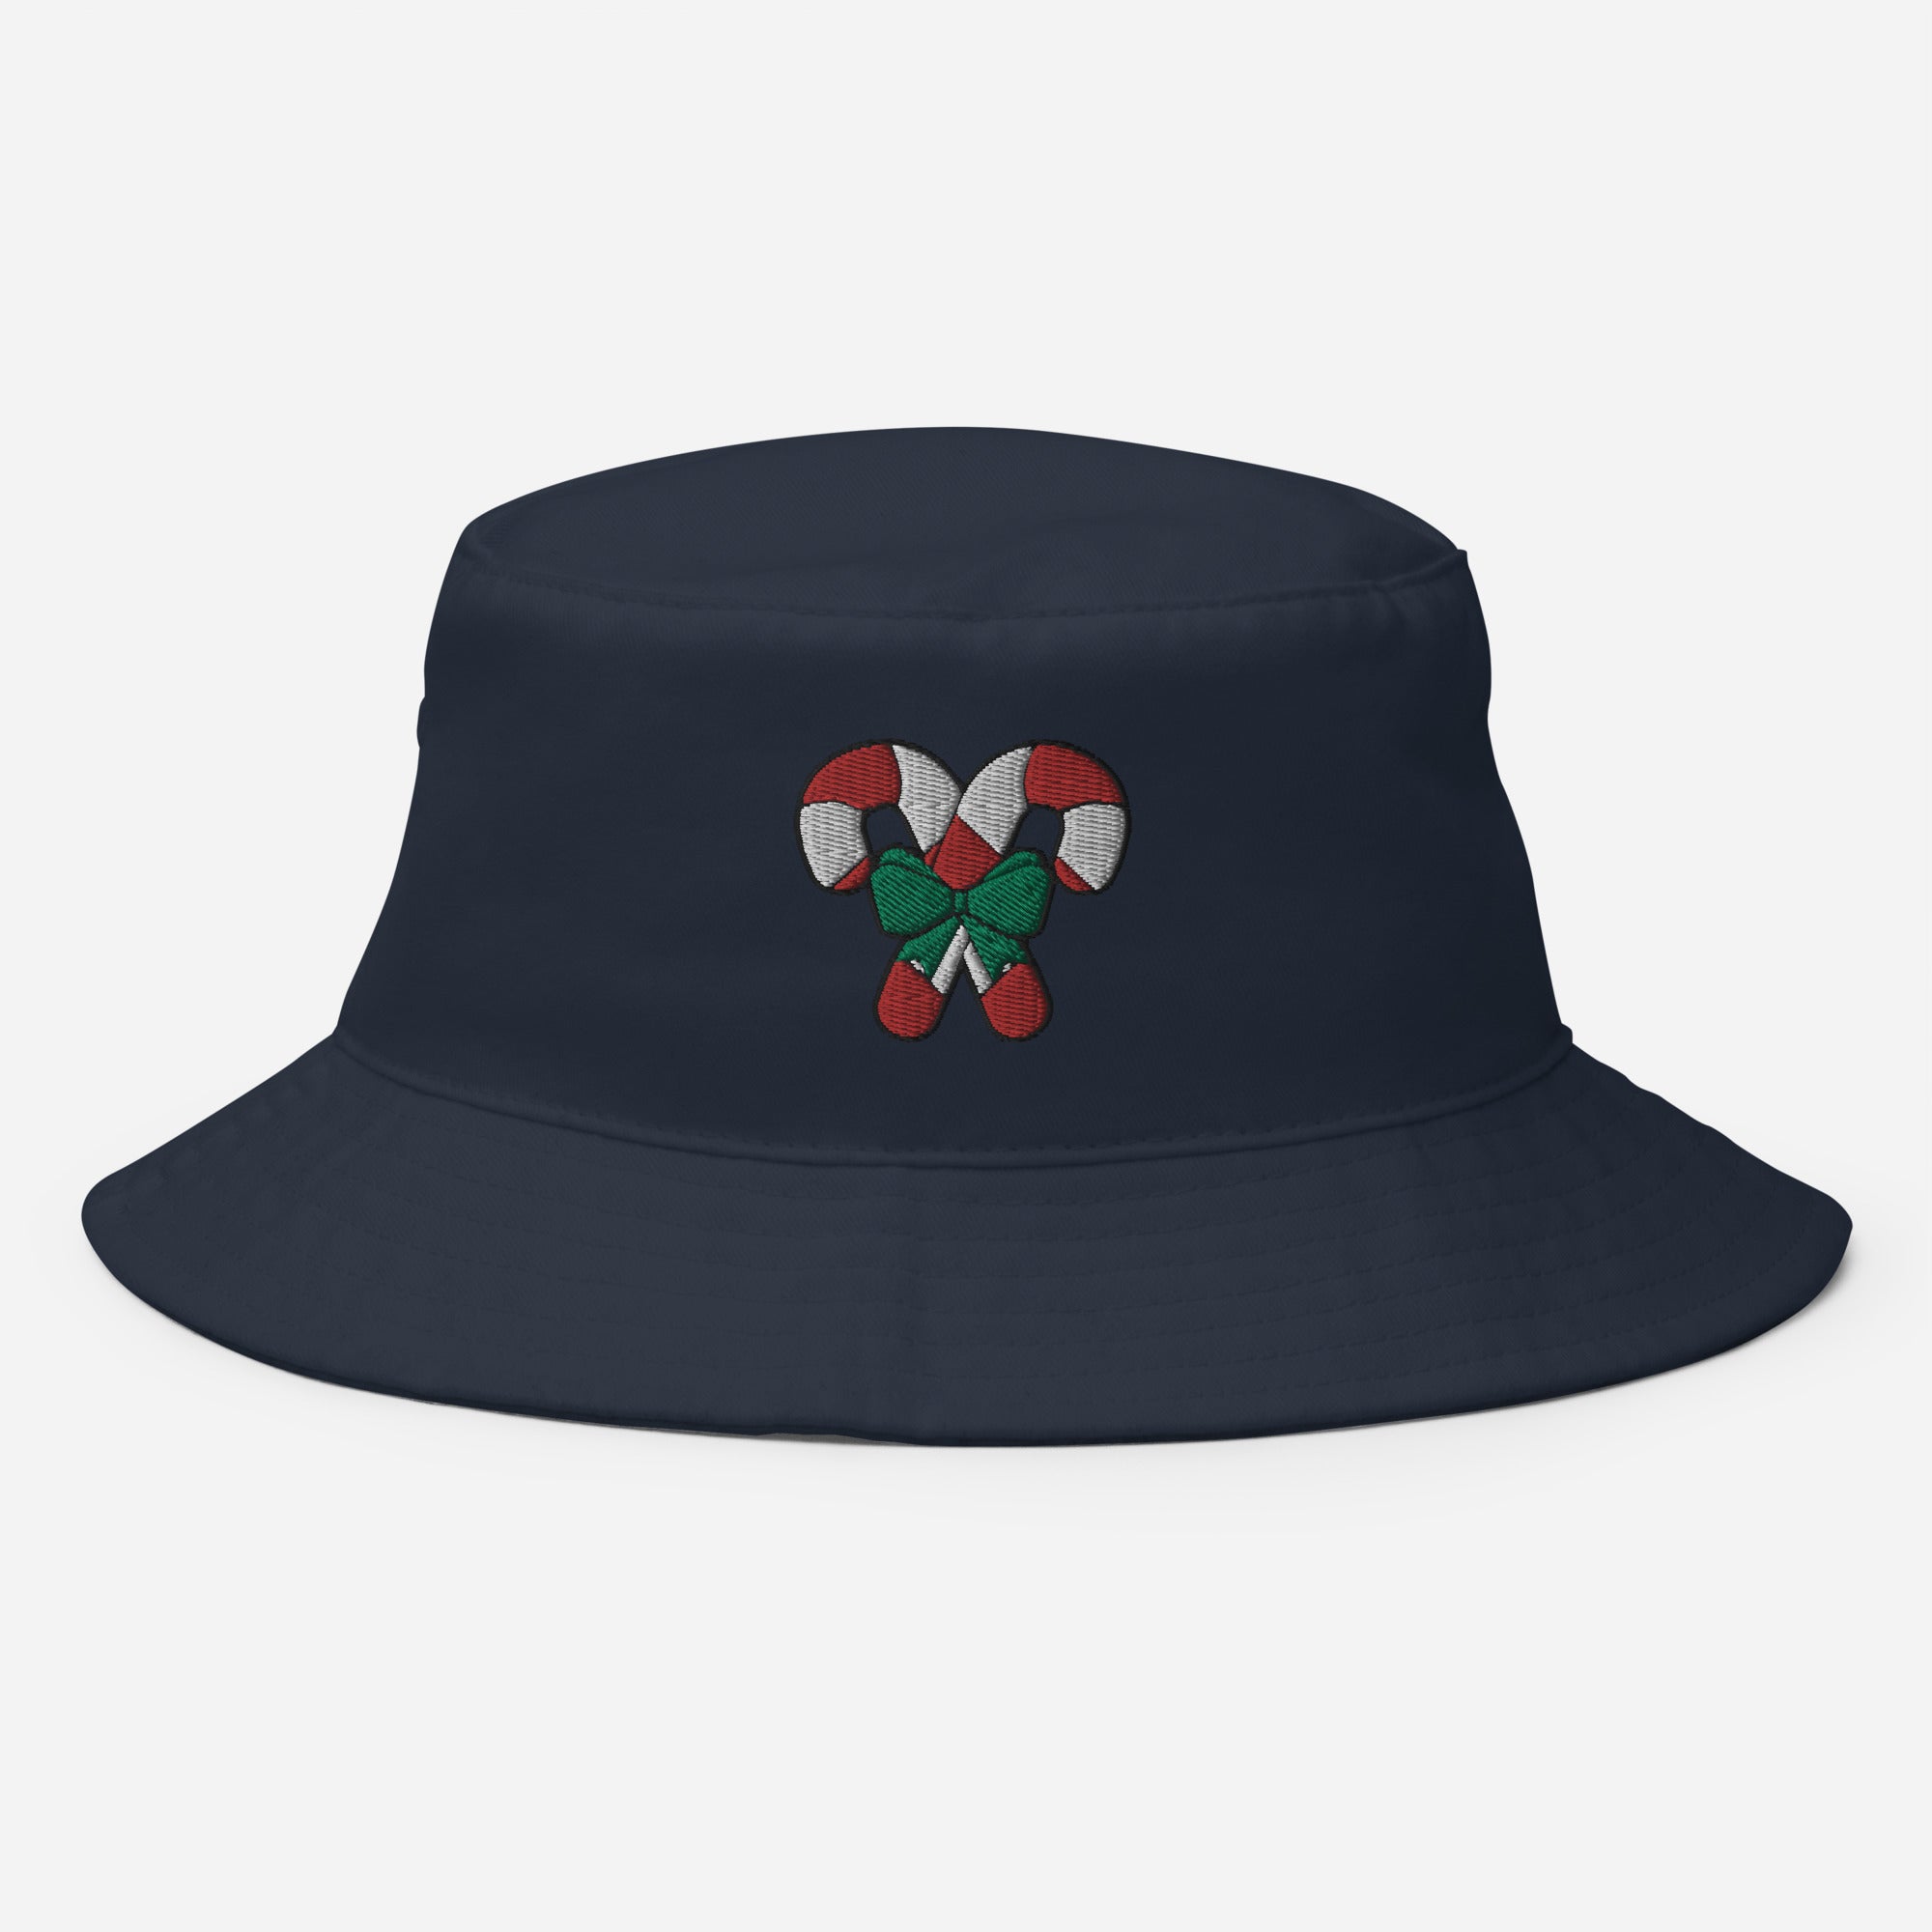 Candy Cane Bucket Hat, Embroidered Christmas Bucket Hat, Handmade Xmas Festive Unisex Cotton Sun Hat